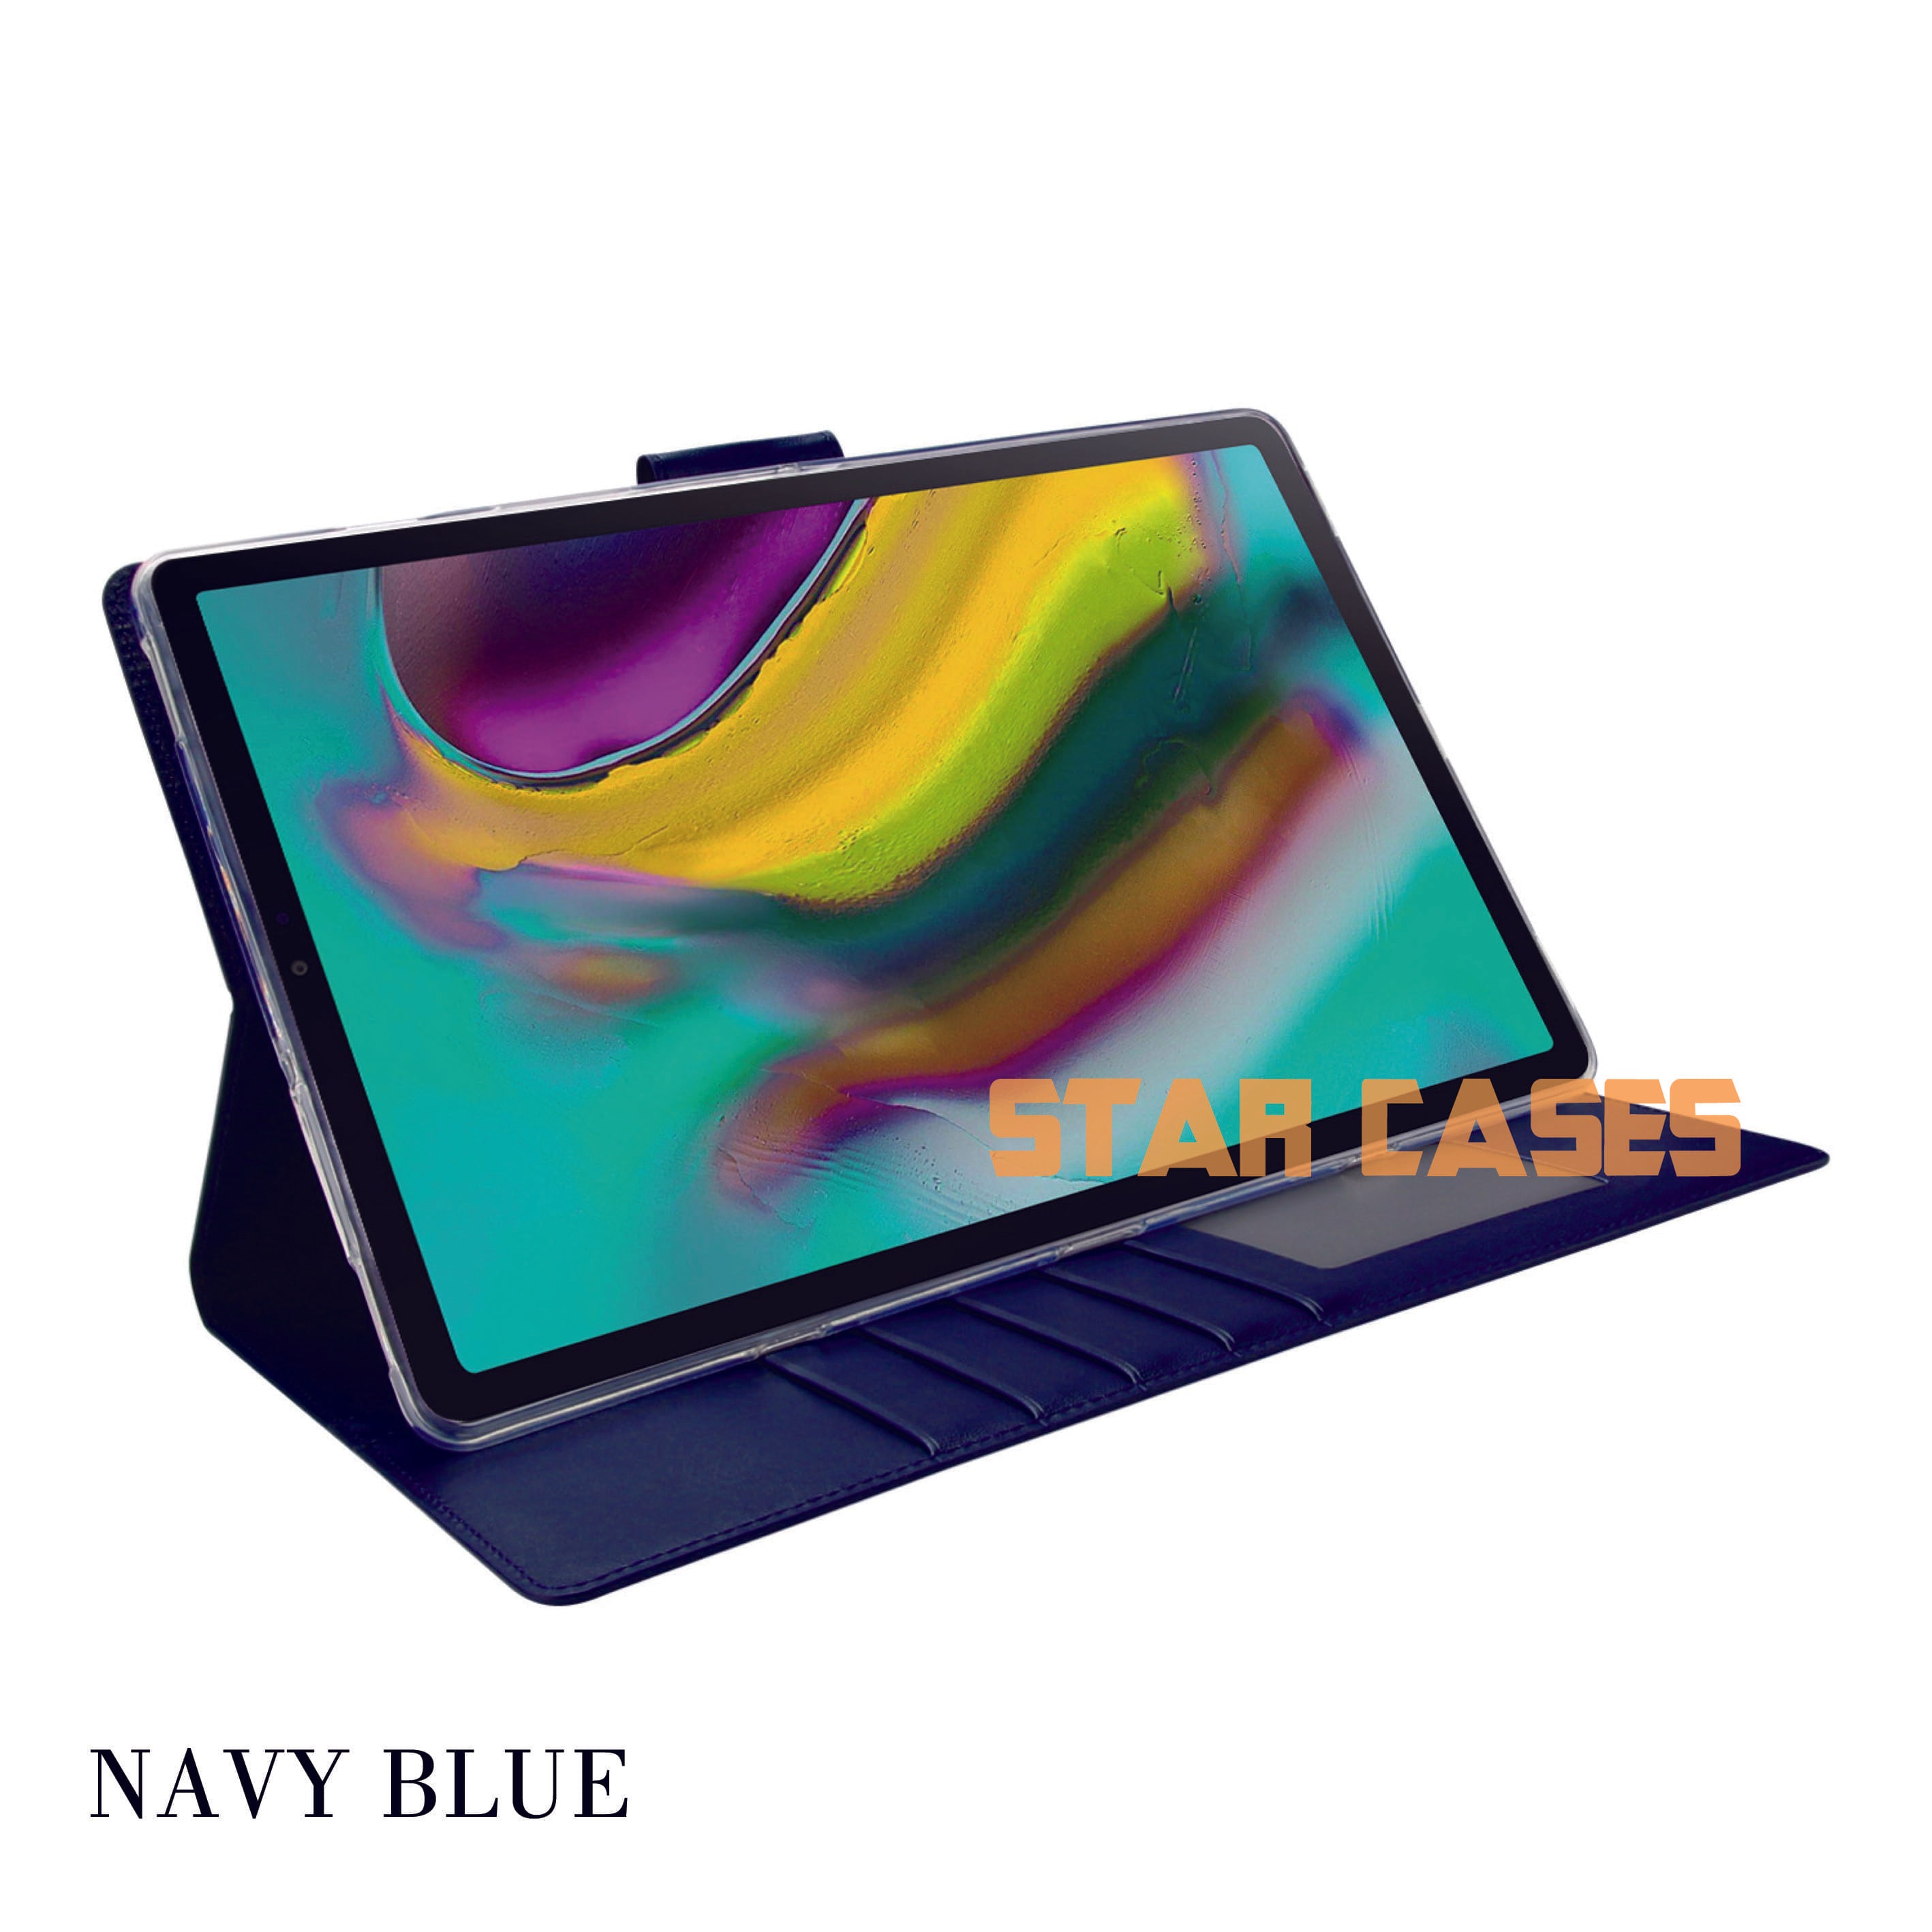 Samsung Tab T510/T515 Tablet Hanman Flip Wallet Case